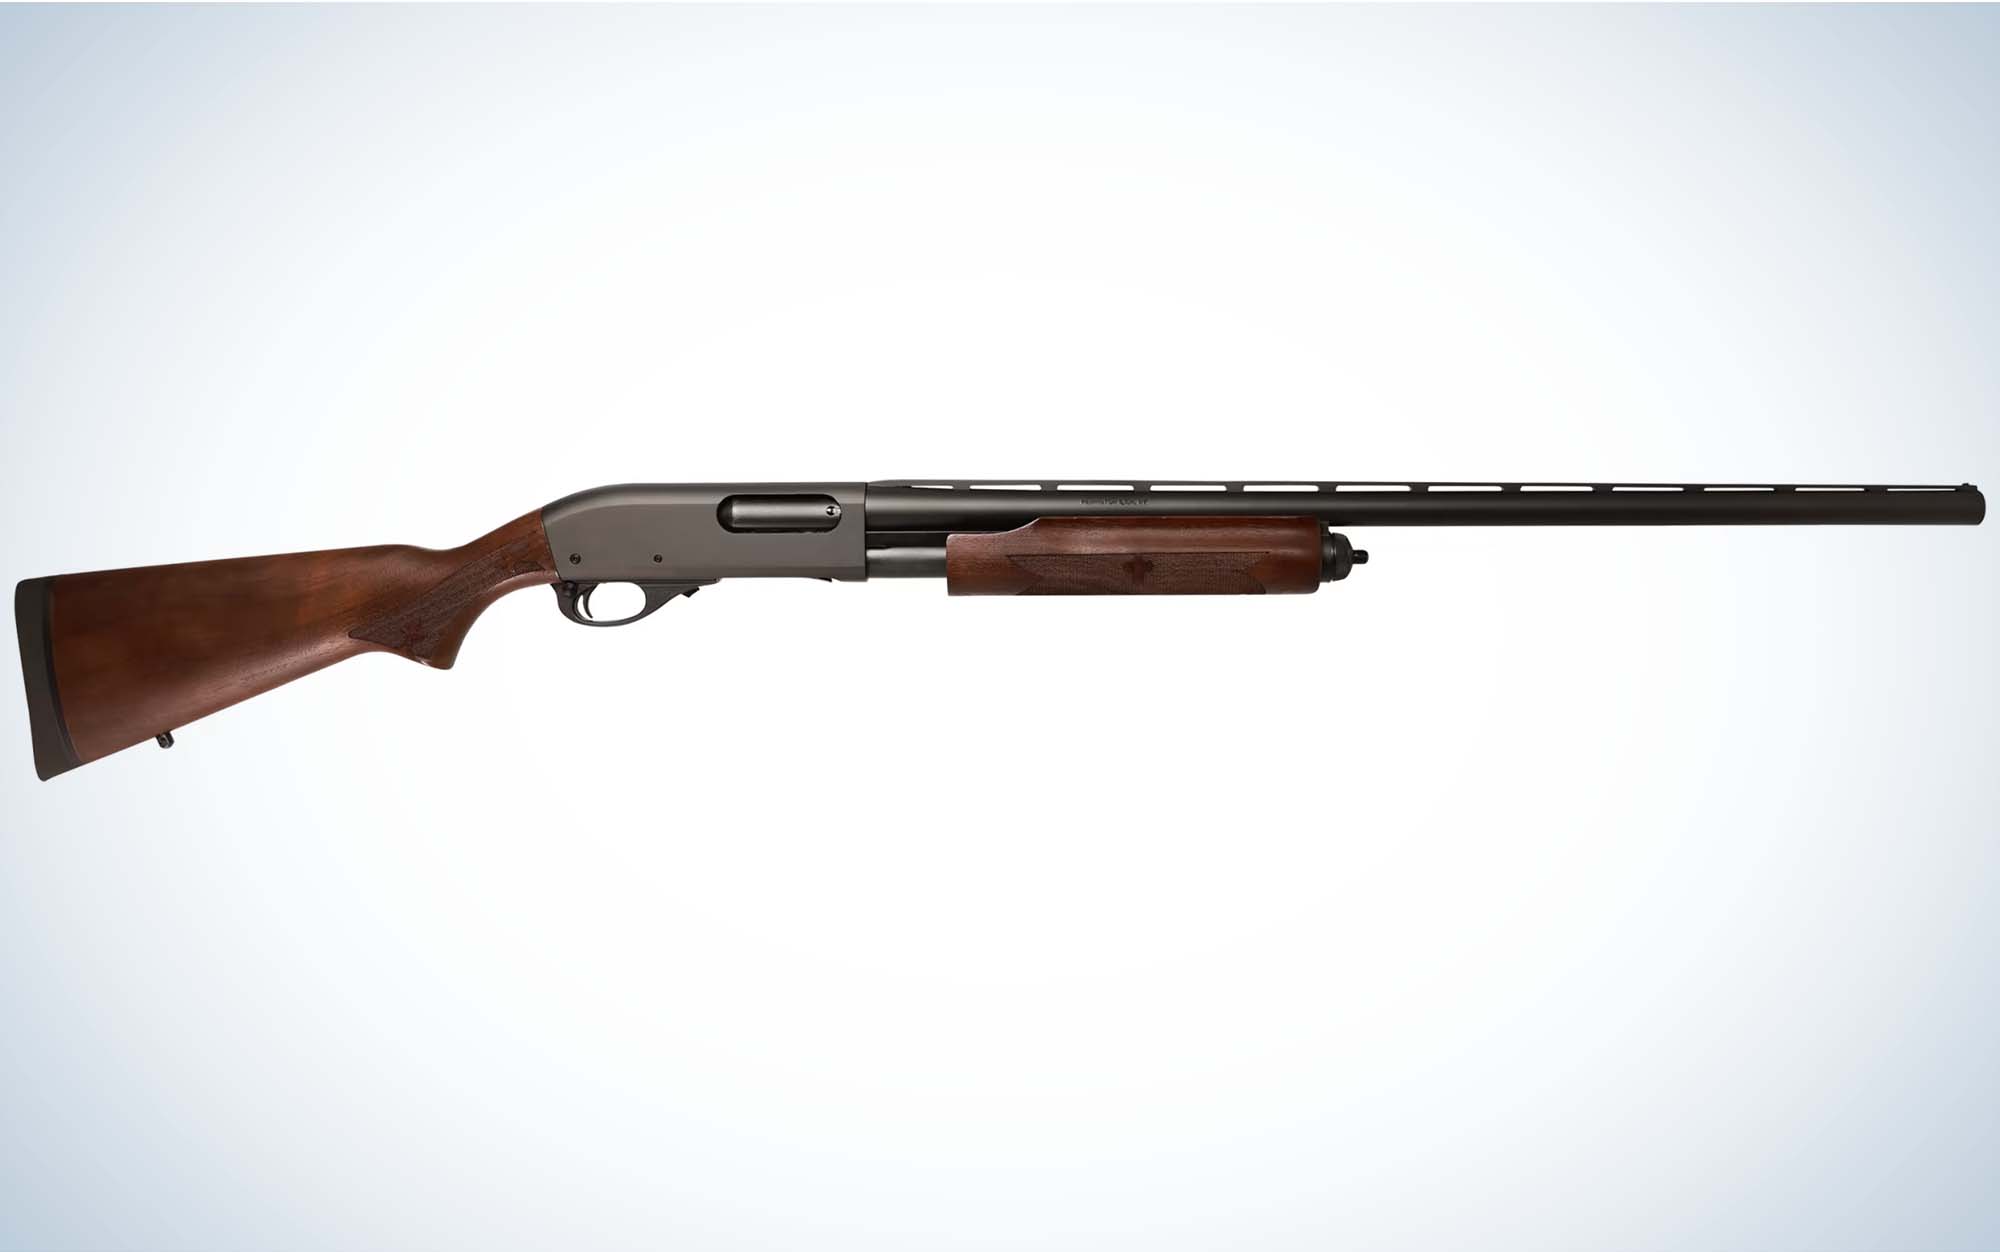 The Remington 870 Fieldmaster Pump-Action Shotgun is one of the best shotguns for turkey hunting.